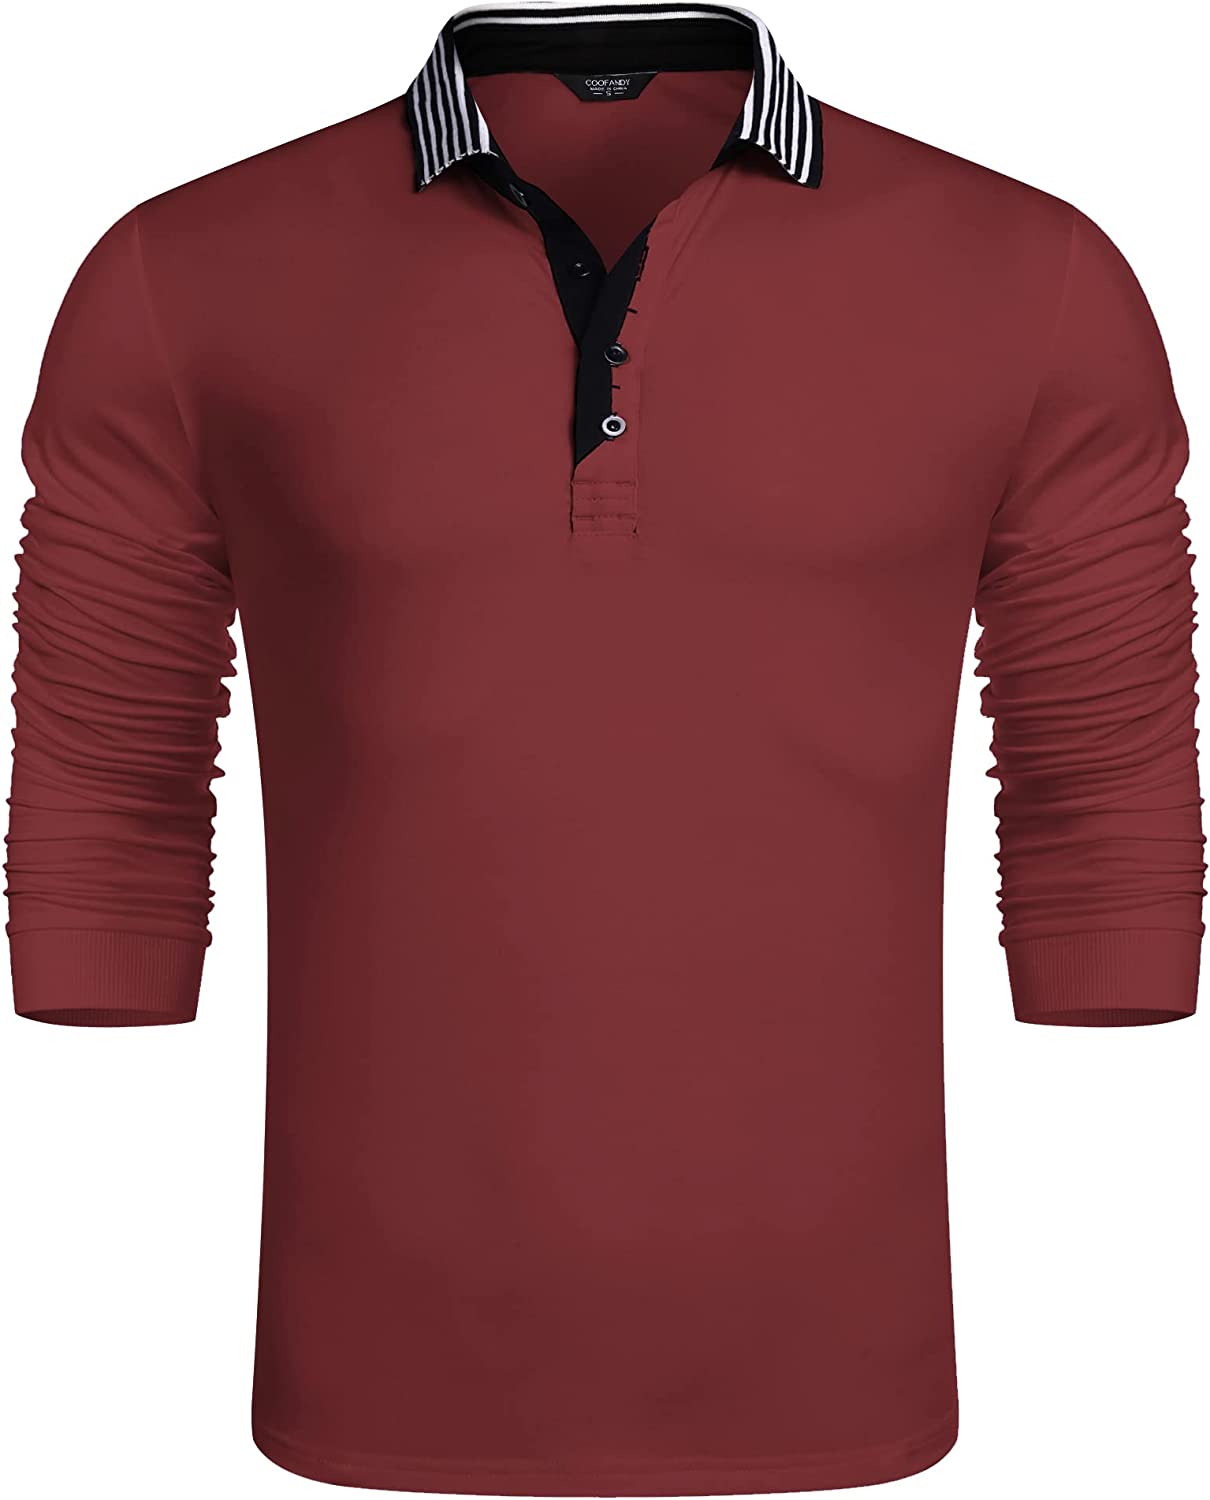  AMDBEL Long Sleeve Polo Shirts For Men Red,Corduroy